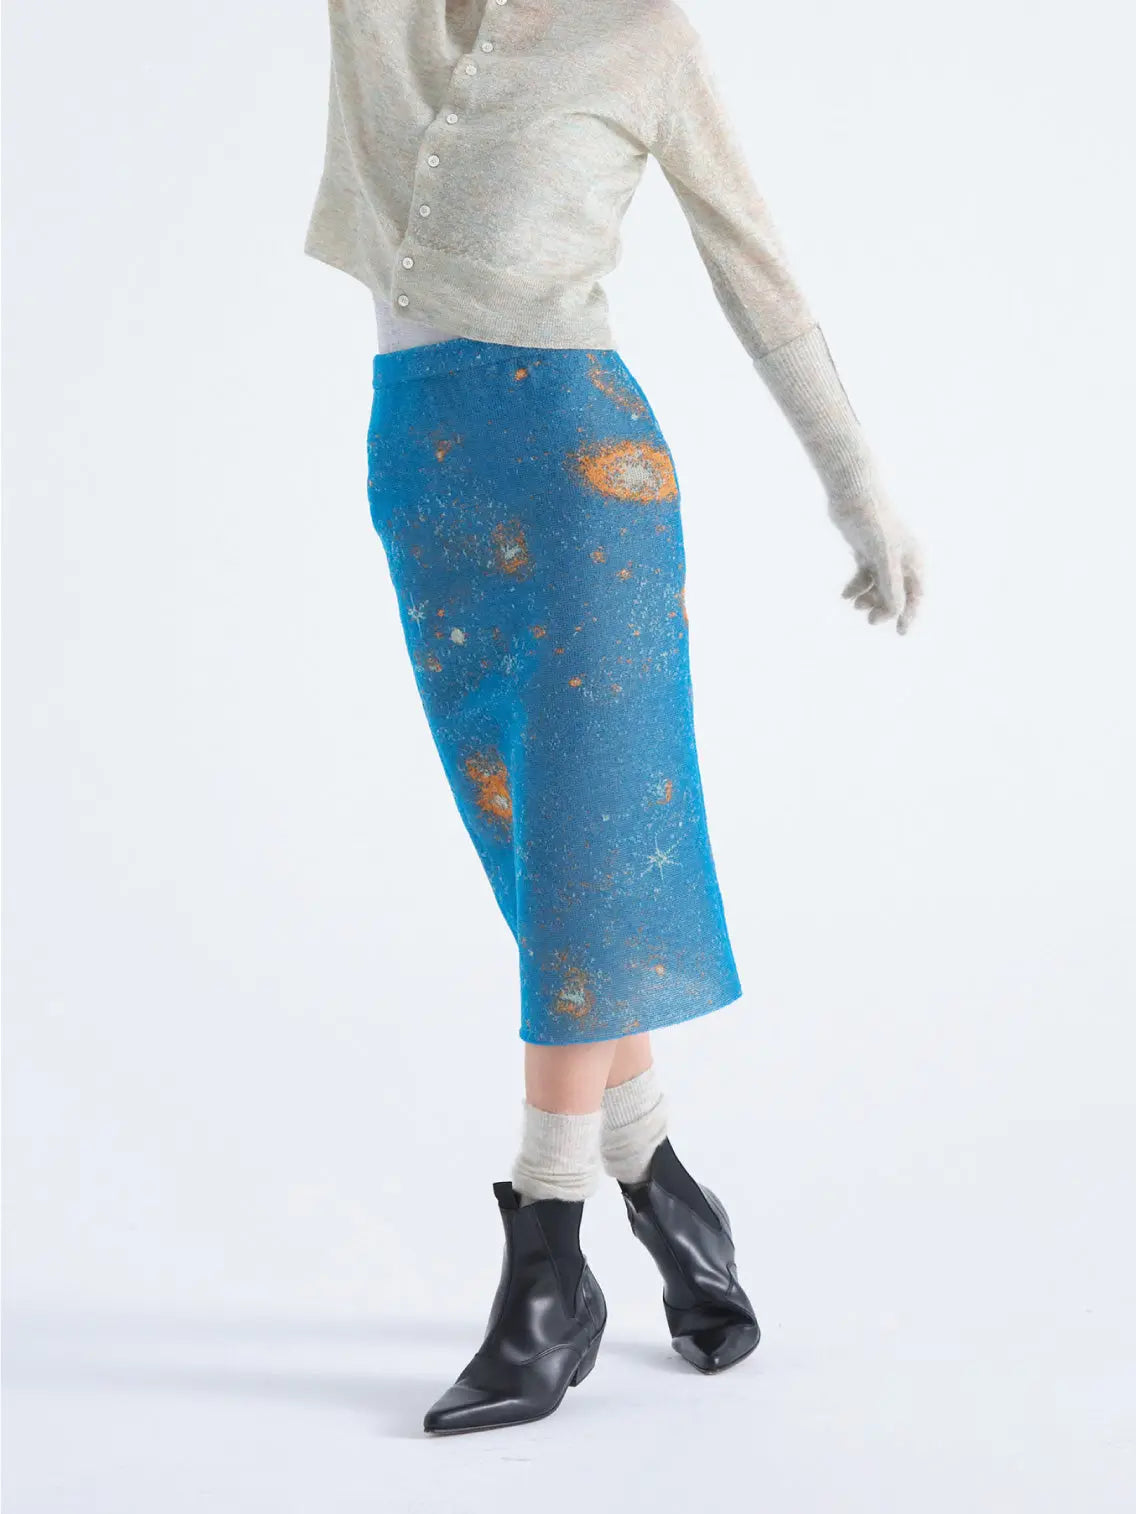 Galaxy Skirt Blue Bielo